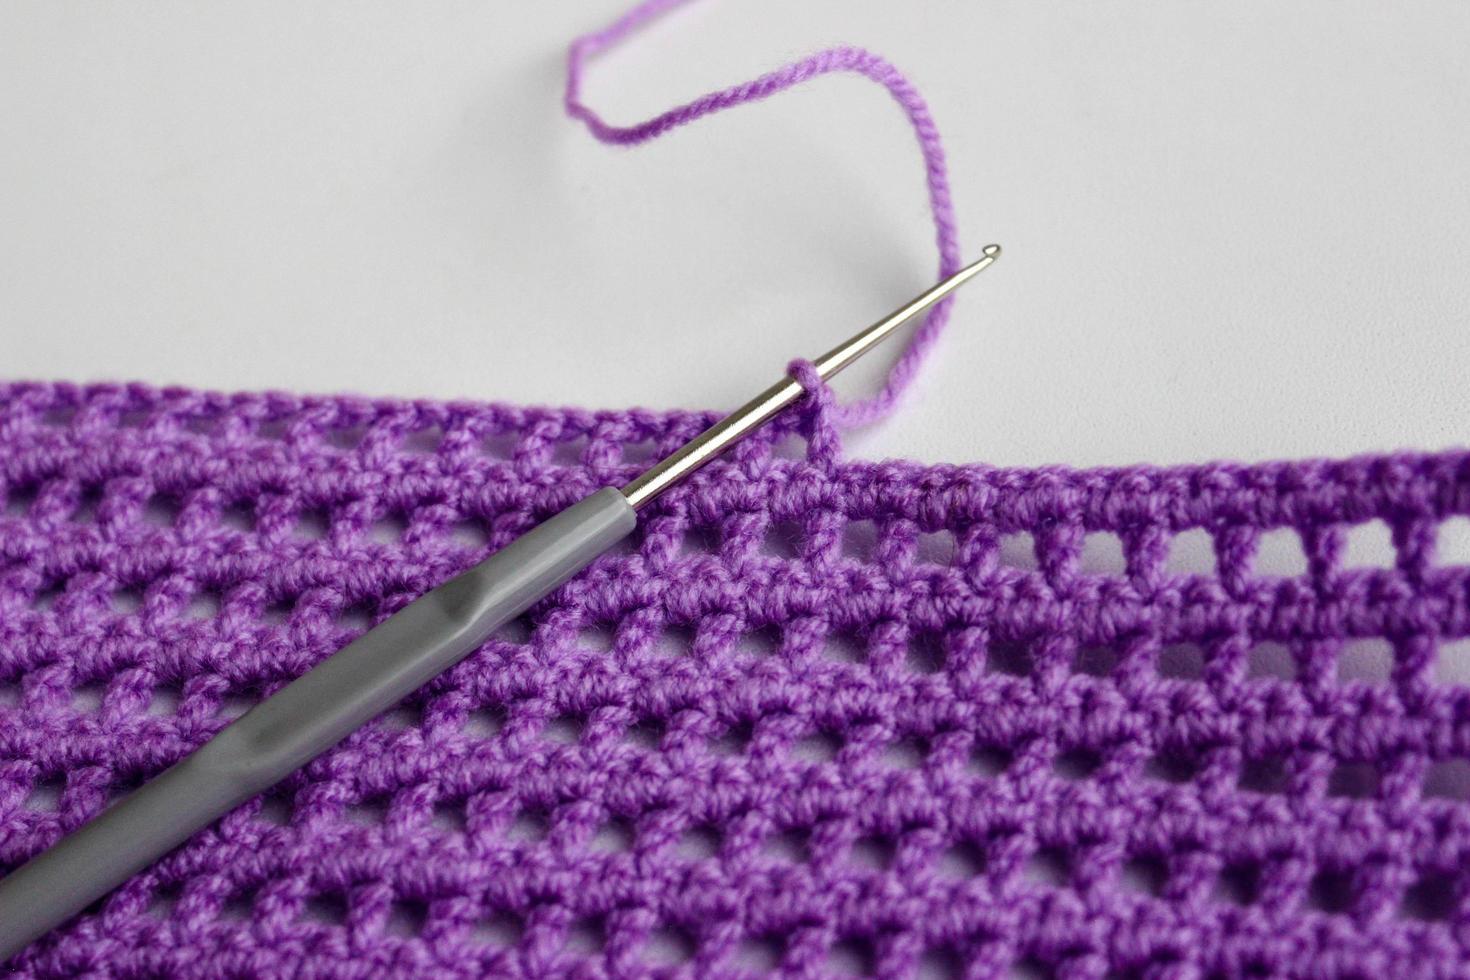 Crochet hook and thread in handmade process photo